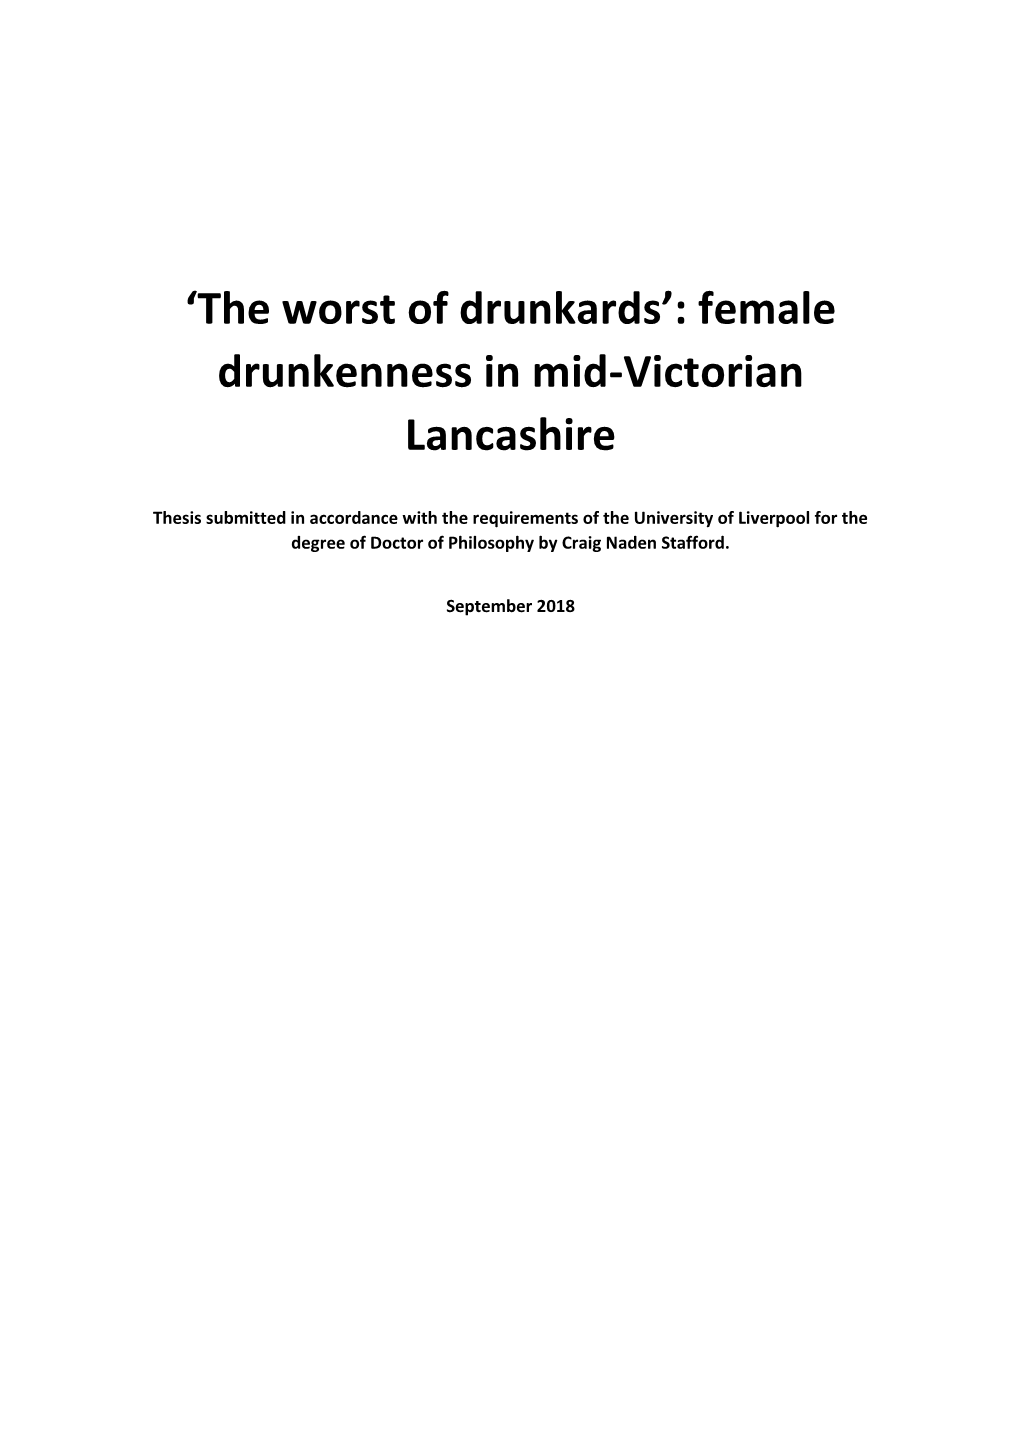 Female Drunkenness in Mid-Victorian Lancashire